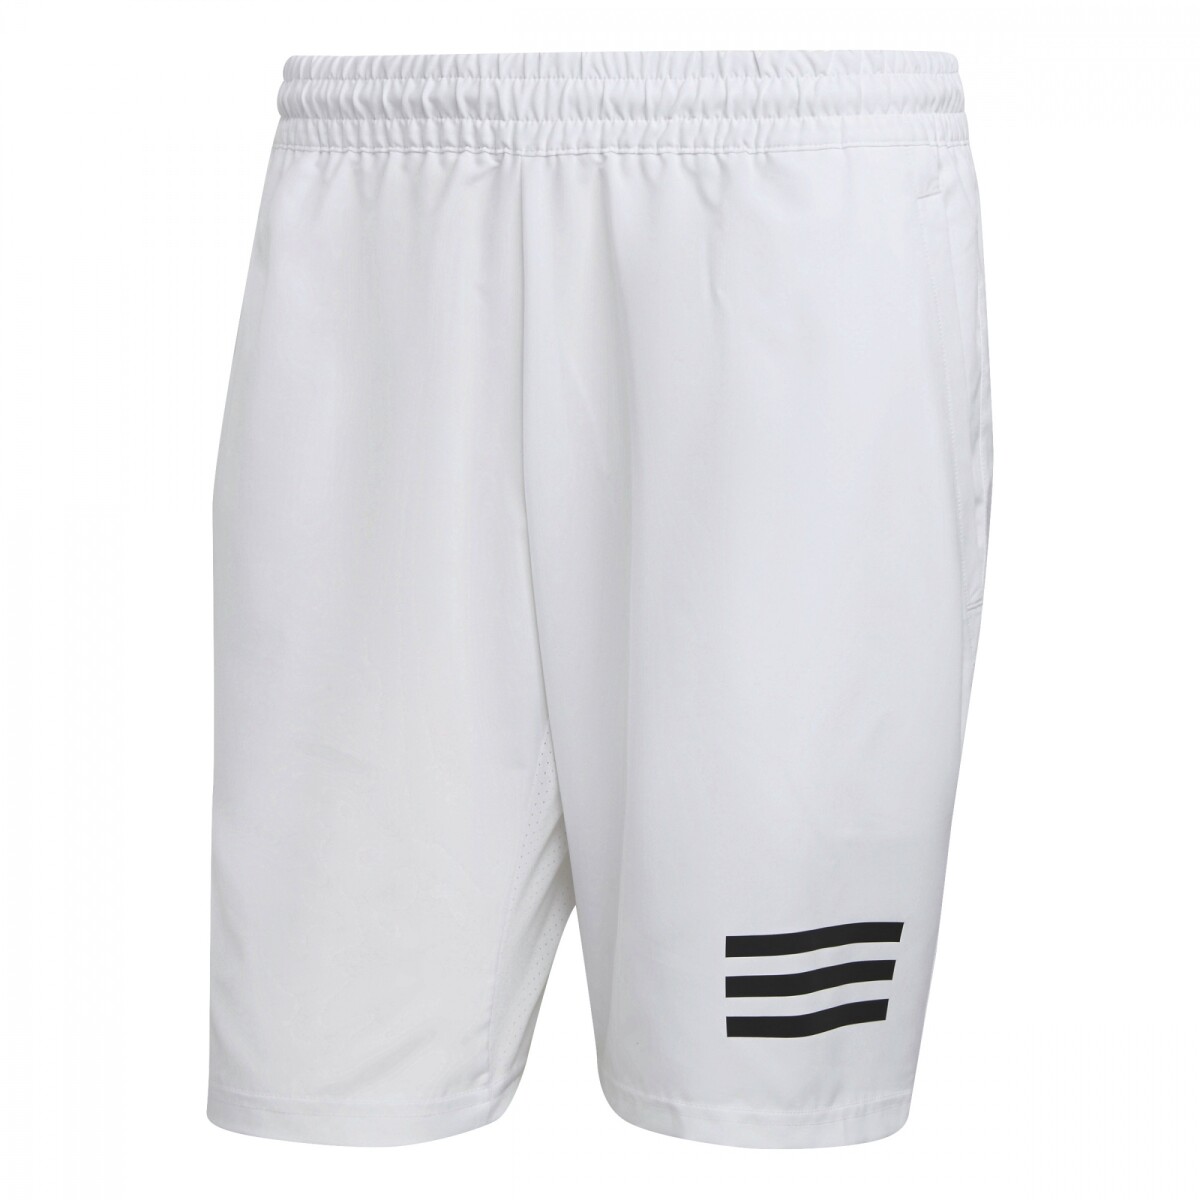 Short Adidas Tennis Hombre Club 3str White - S/C 